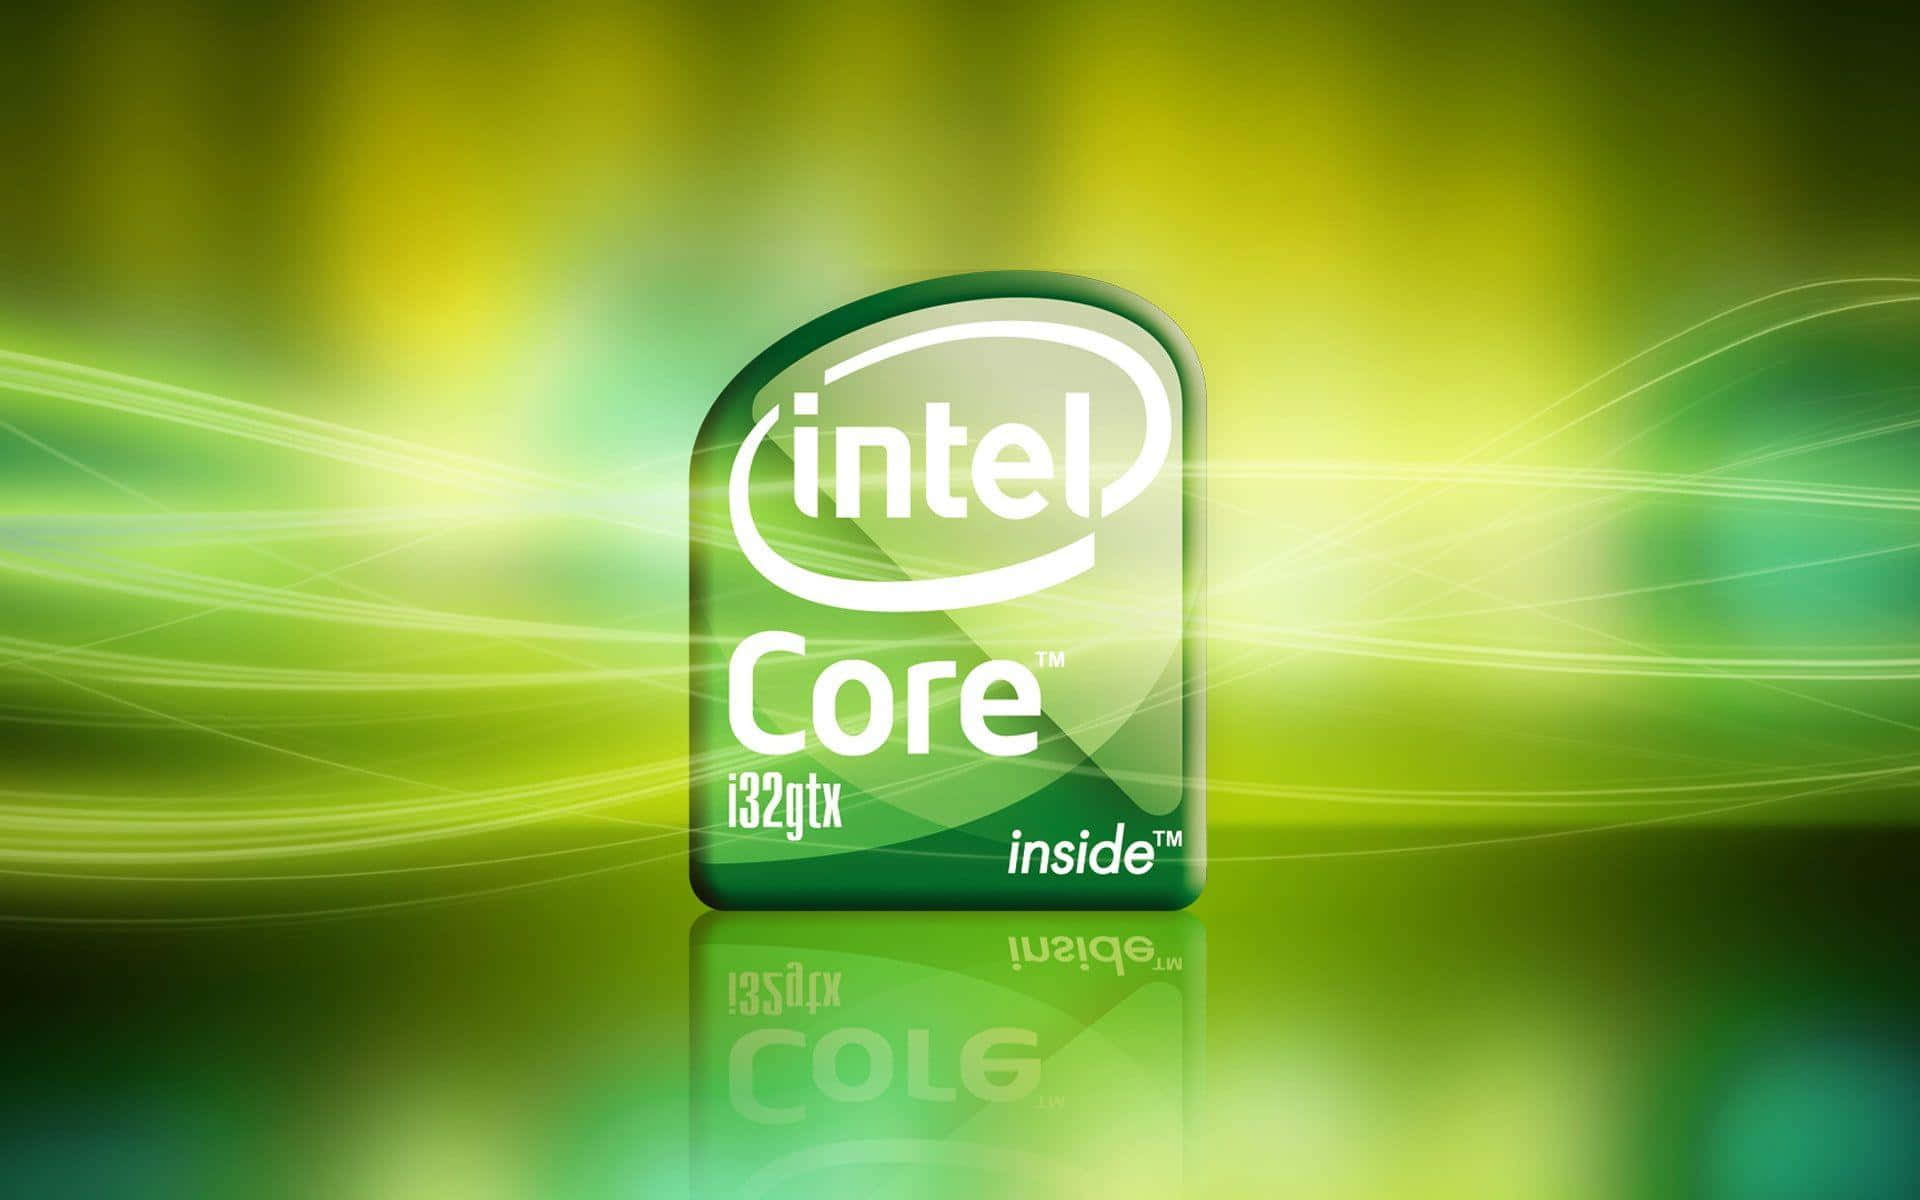 Intel Core Processor Branding Abstract Background Wallpaper